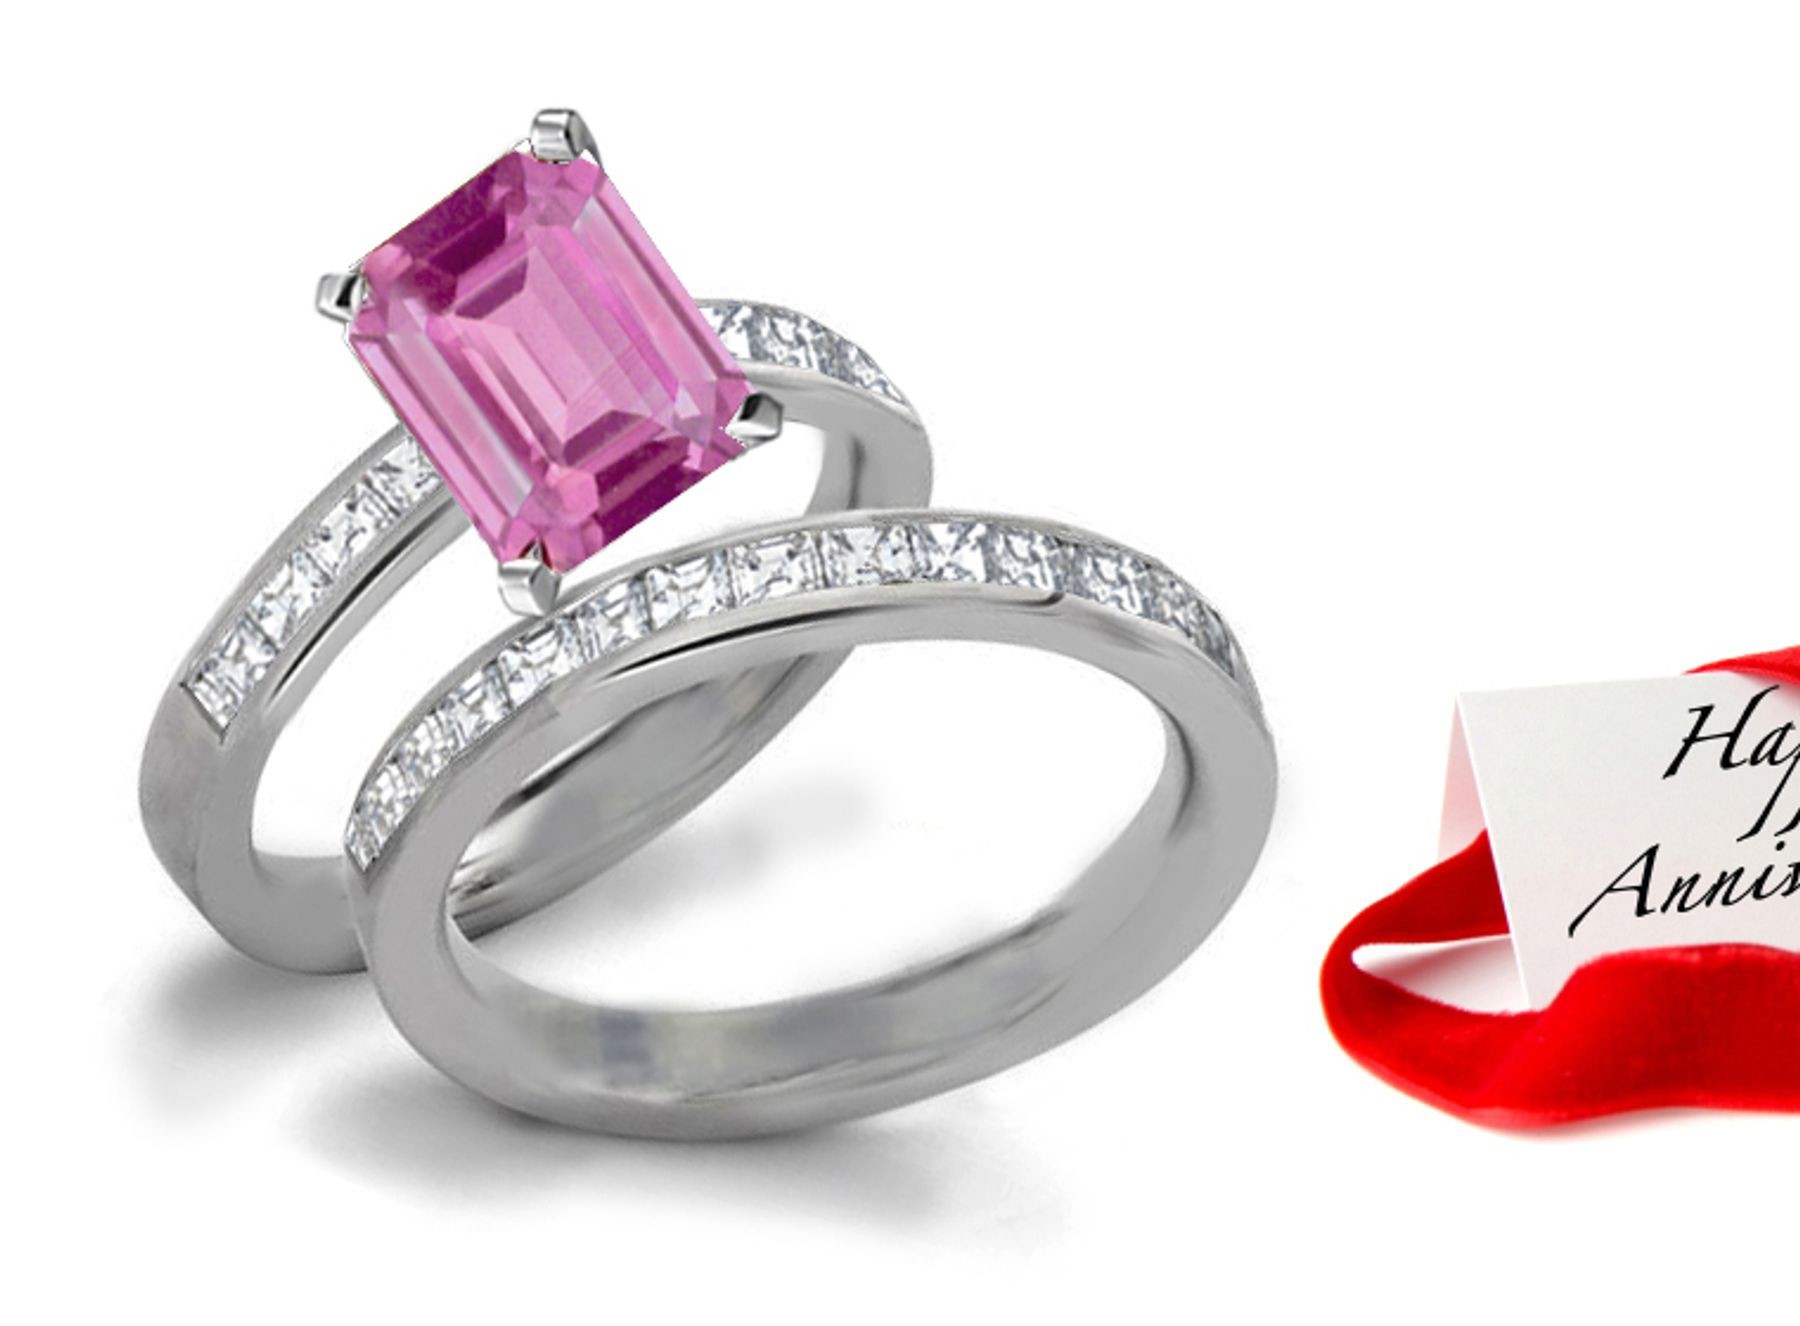 Strikingly Elegant: Pink Sapphire Diamond Wedding & Engagement Rings